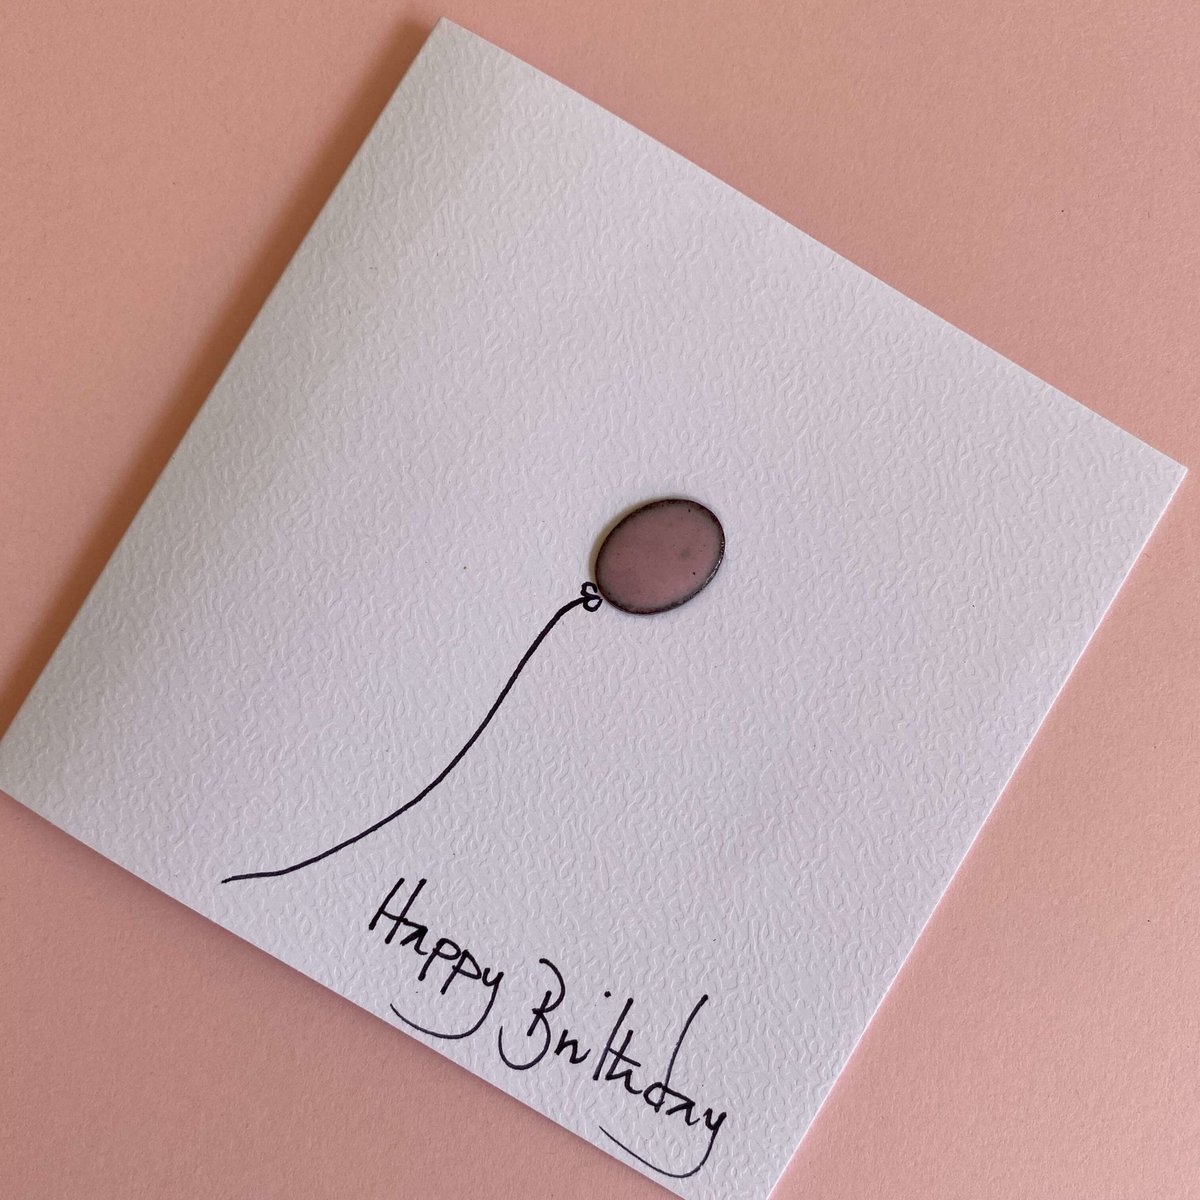 Handmade Birthday Card tuppu.net/45509d74 #UKHashtags #bizbubble #MHHSBD ##UKGiftHour #giftideas #HandmadeHour #inbizhour #shopsmall #Birthday